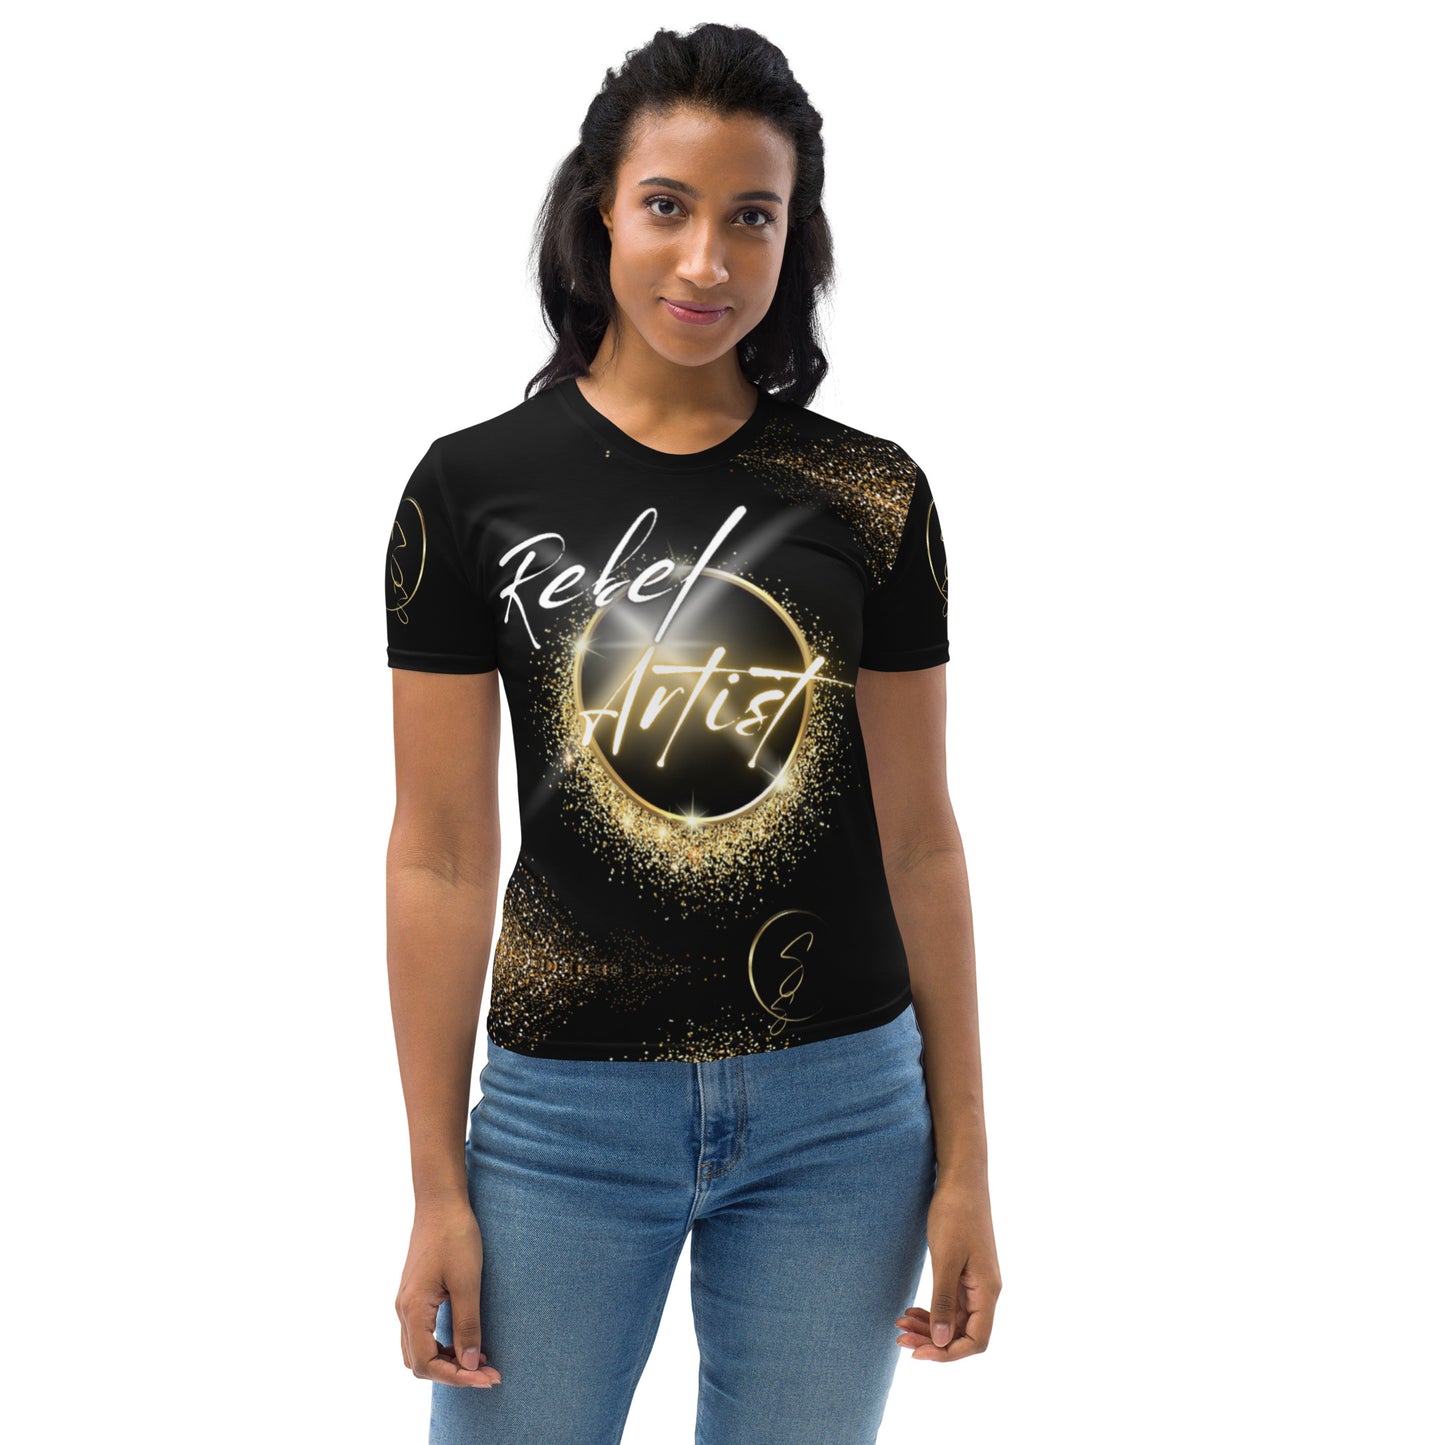 Rebel Artists Women's T-Shirt - Black